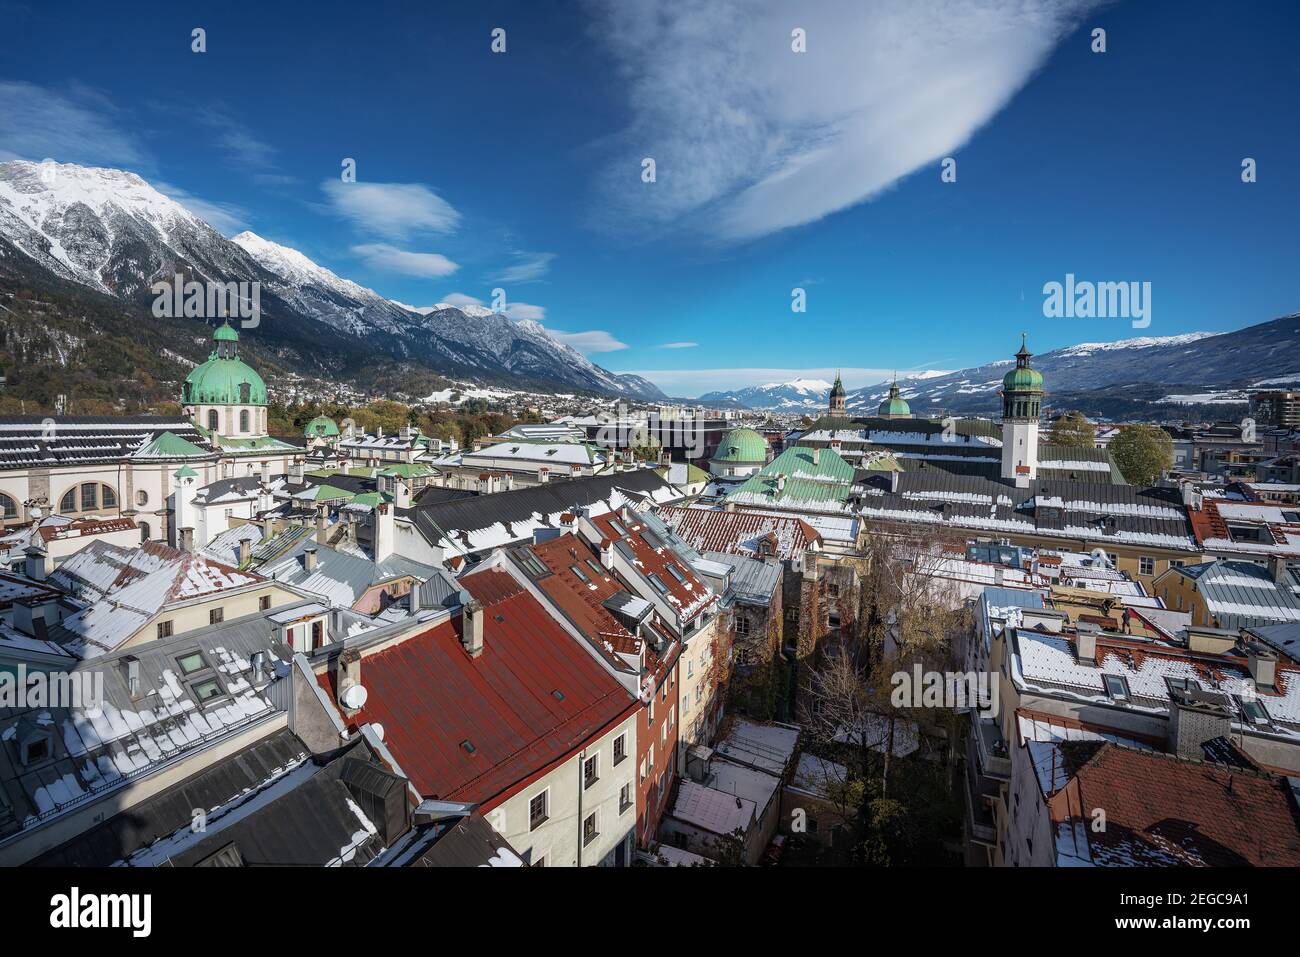 Vue aérienne de la ville d'Innsbruck - Innsbruck, Tyrol, Autriche Banque D'Images